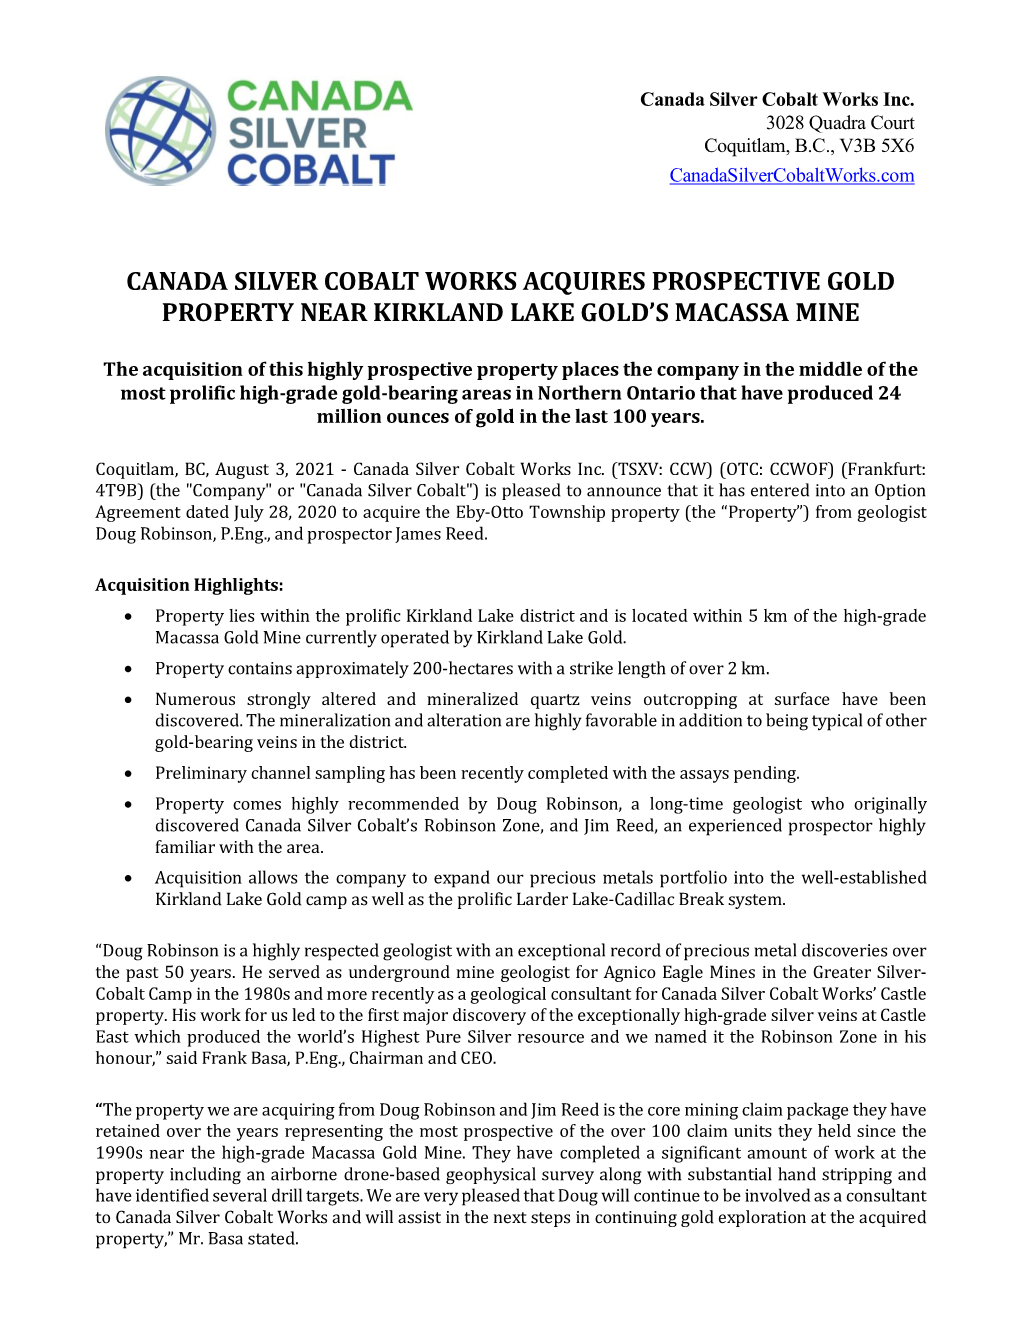 Canada Silver Cobalt Works Acquires Prospective Gold Property Near Kirkland Lake Gold’S Macassa Mine